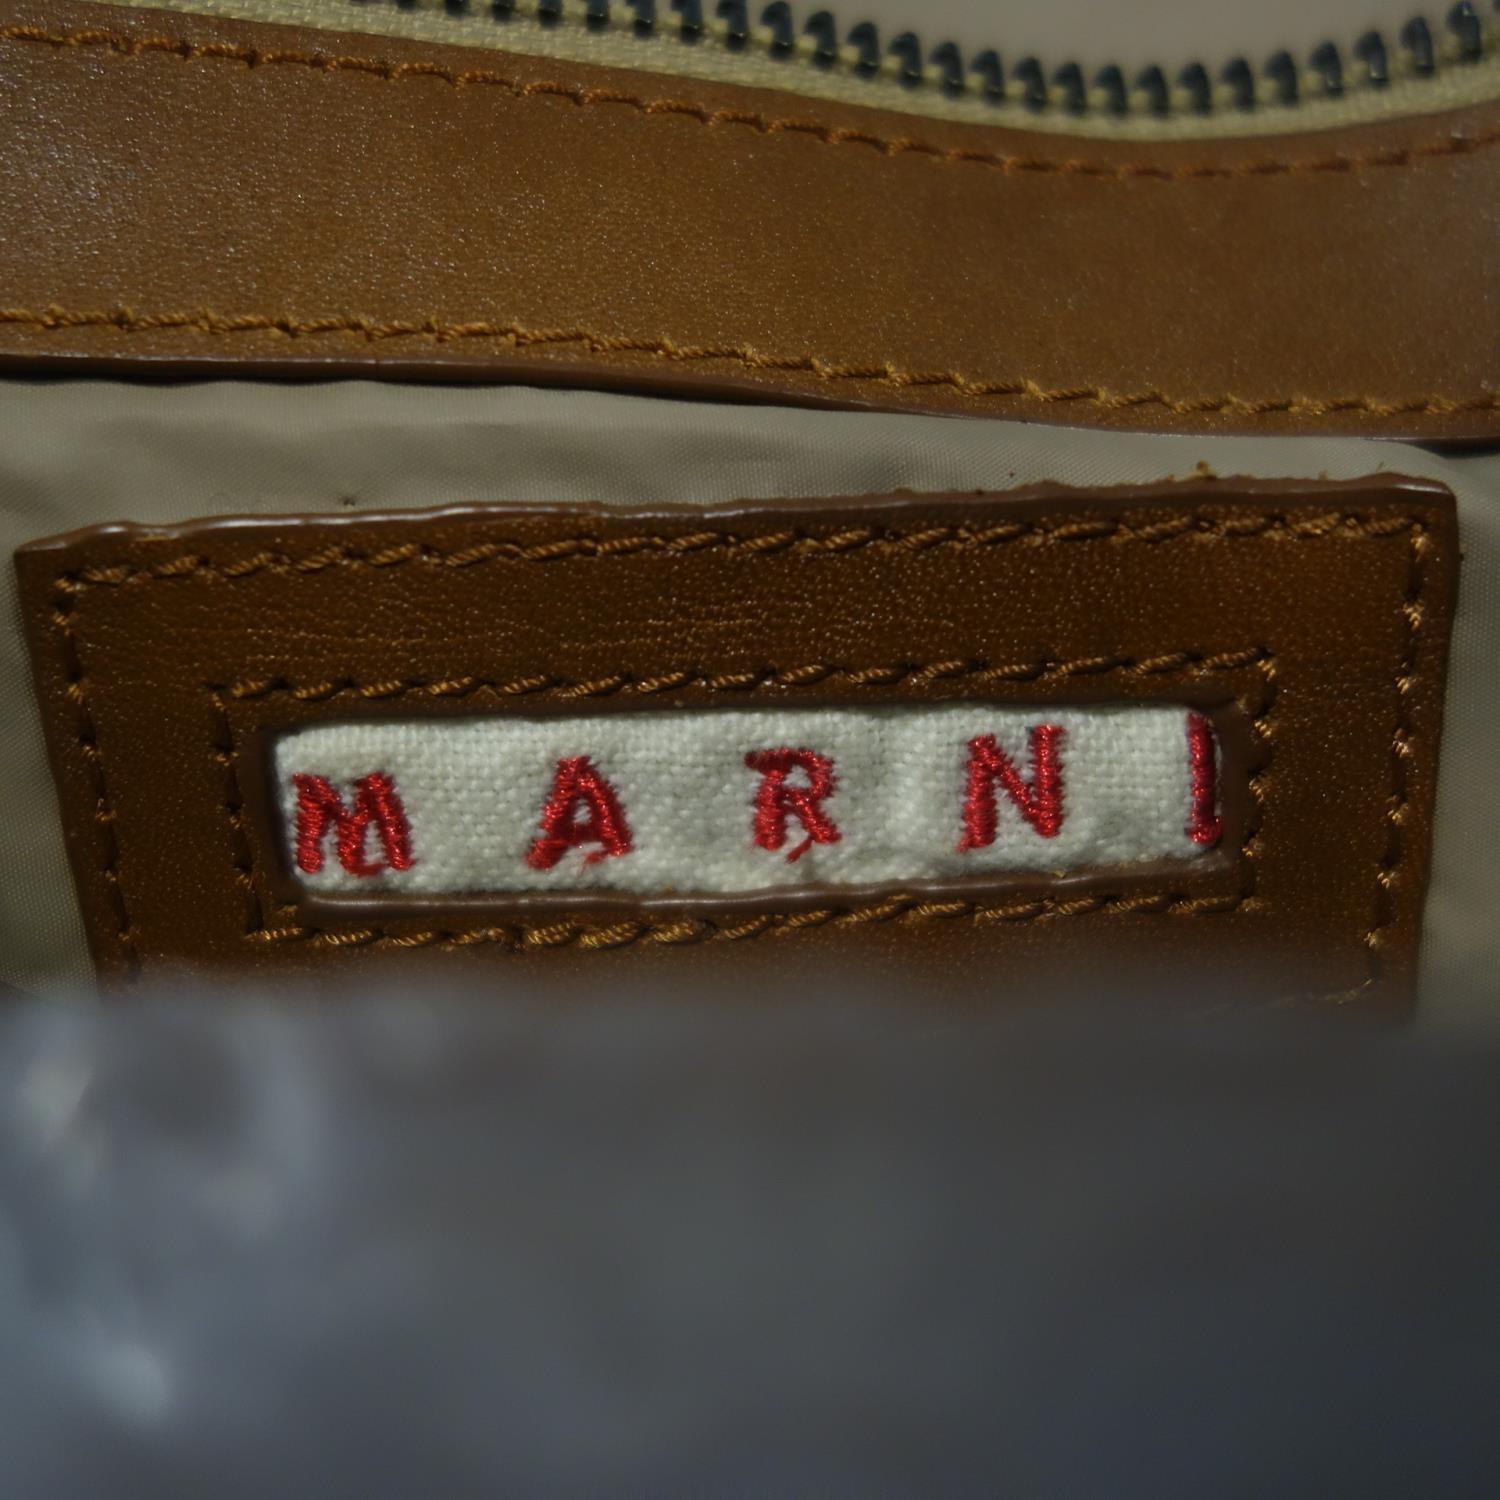 A Marni suede handbag together with a Marni red leather handbag - Image 3 of 5